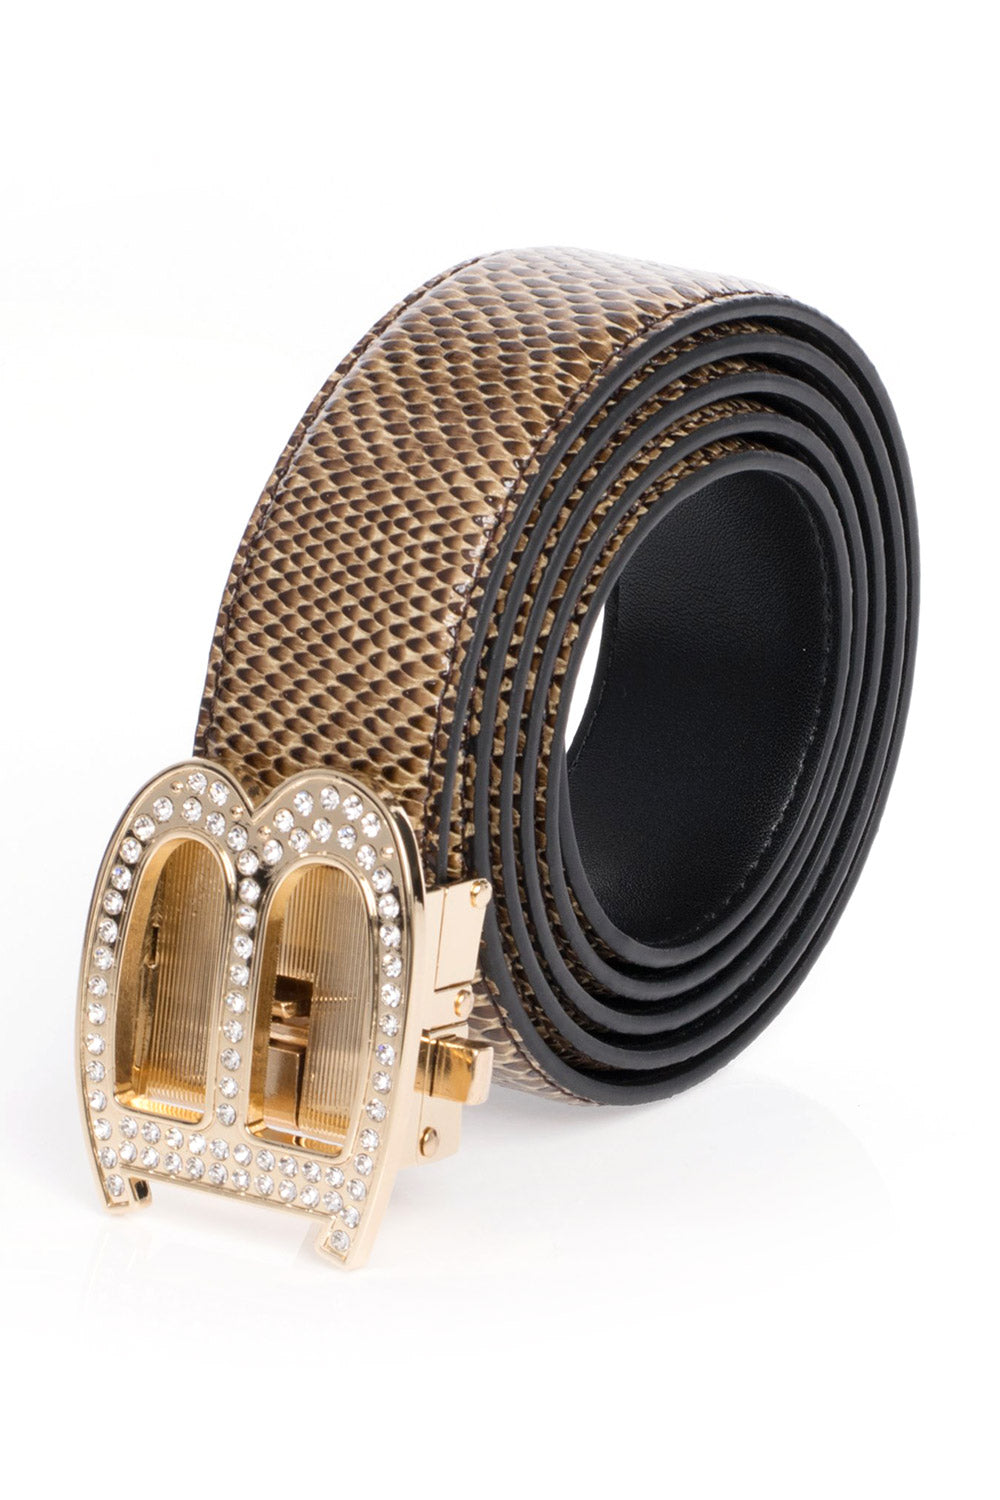 Barabas "B" Shiny Gold/Brown Snake Adjustable Luxury Leather Dress Belt